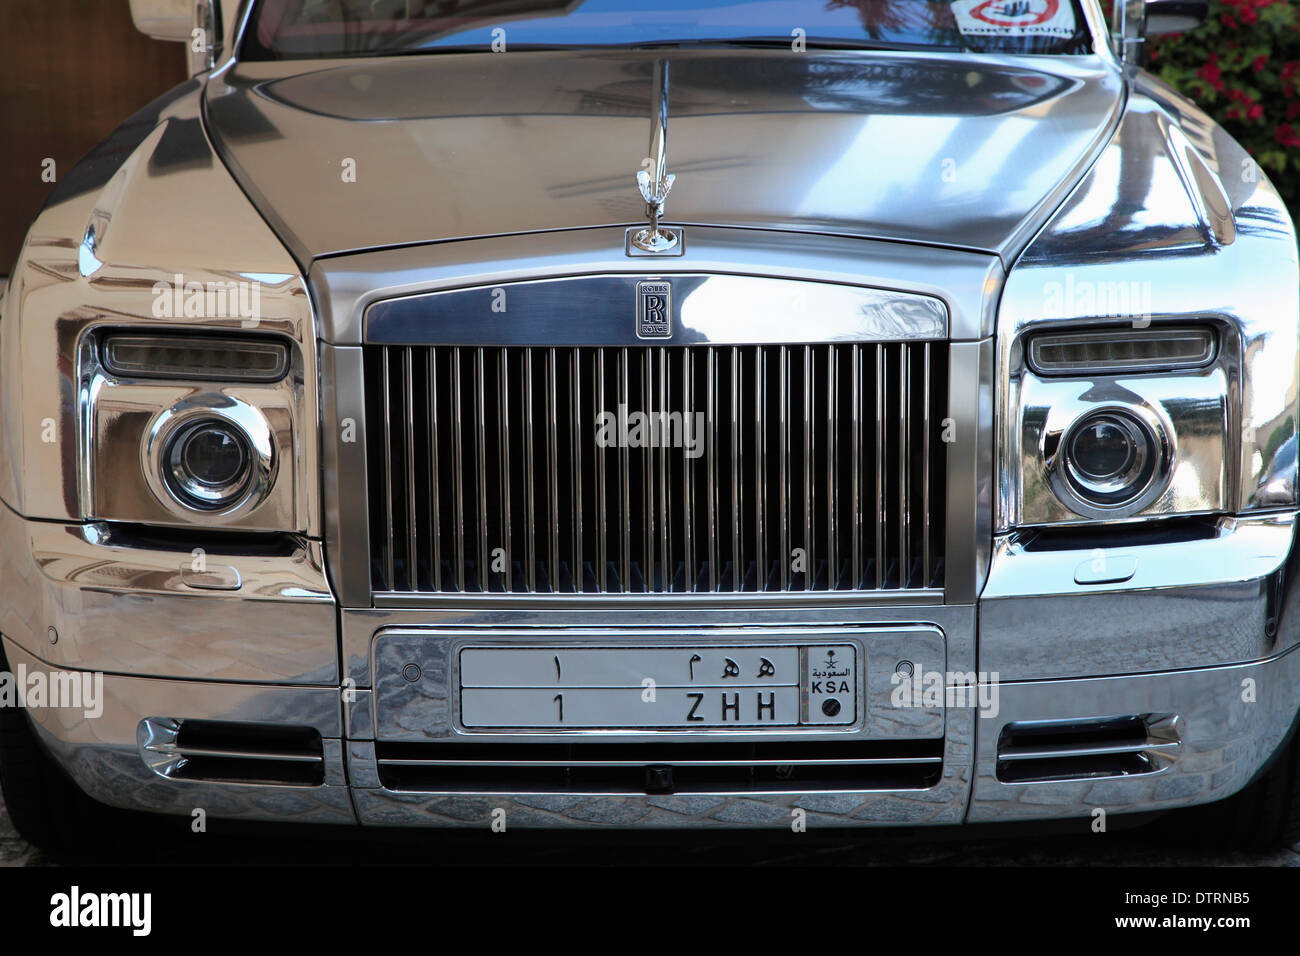 United Arab Emirates, Dubai, silver Rolls Royce car, Stock Photo